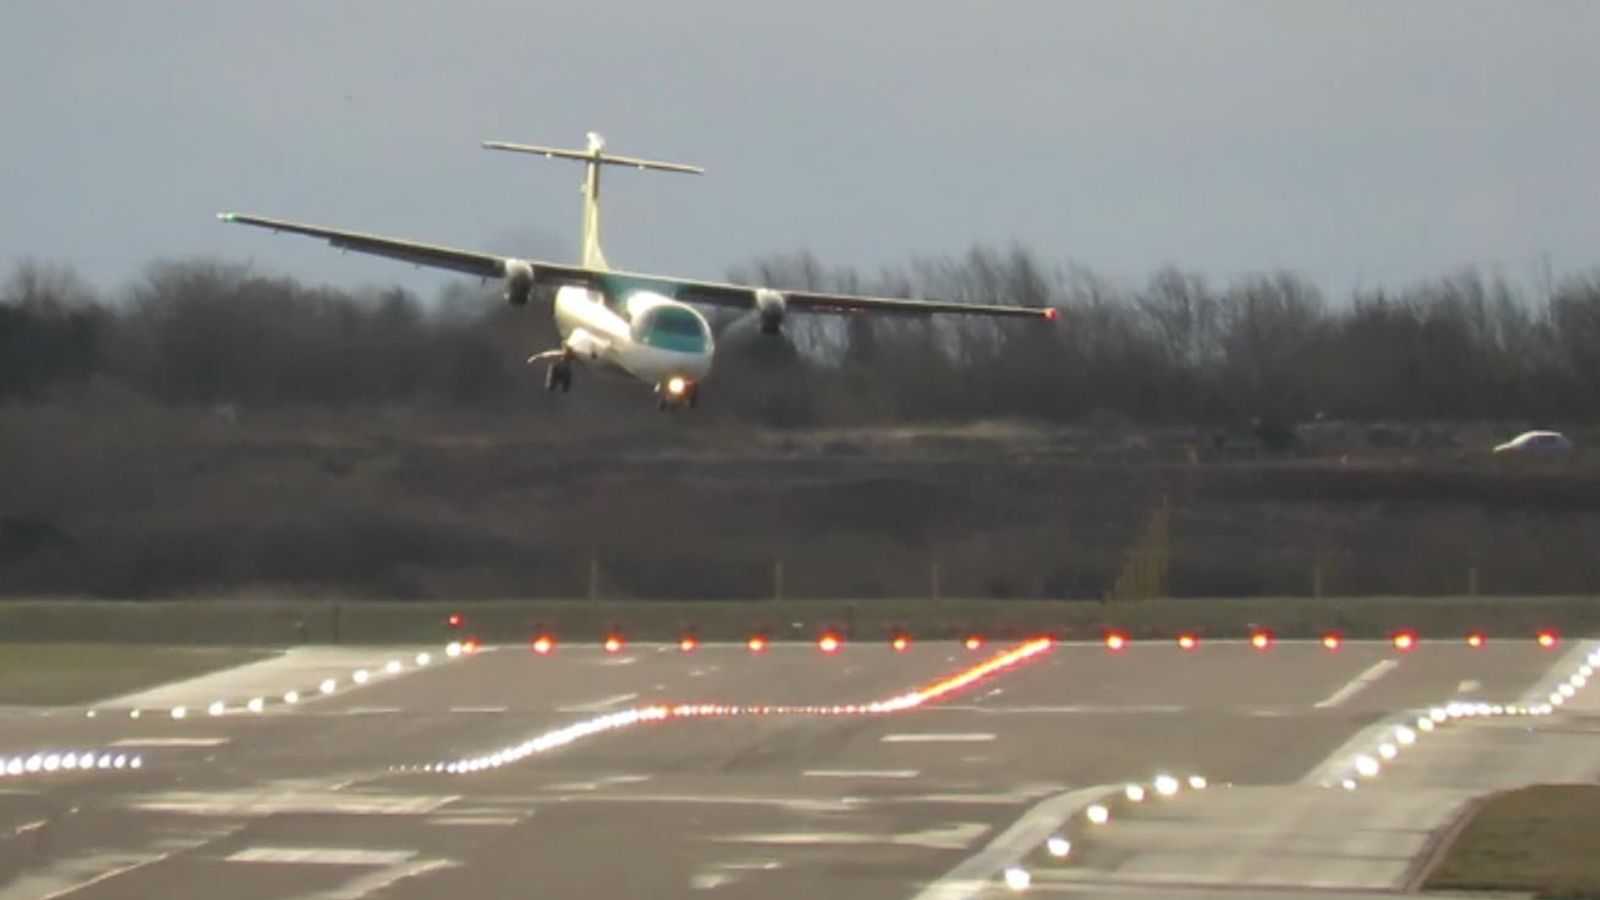 Storm Pia: Video shows Aer Lingus plane battling 50mph crosswinds in Birmingham landing